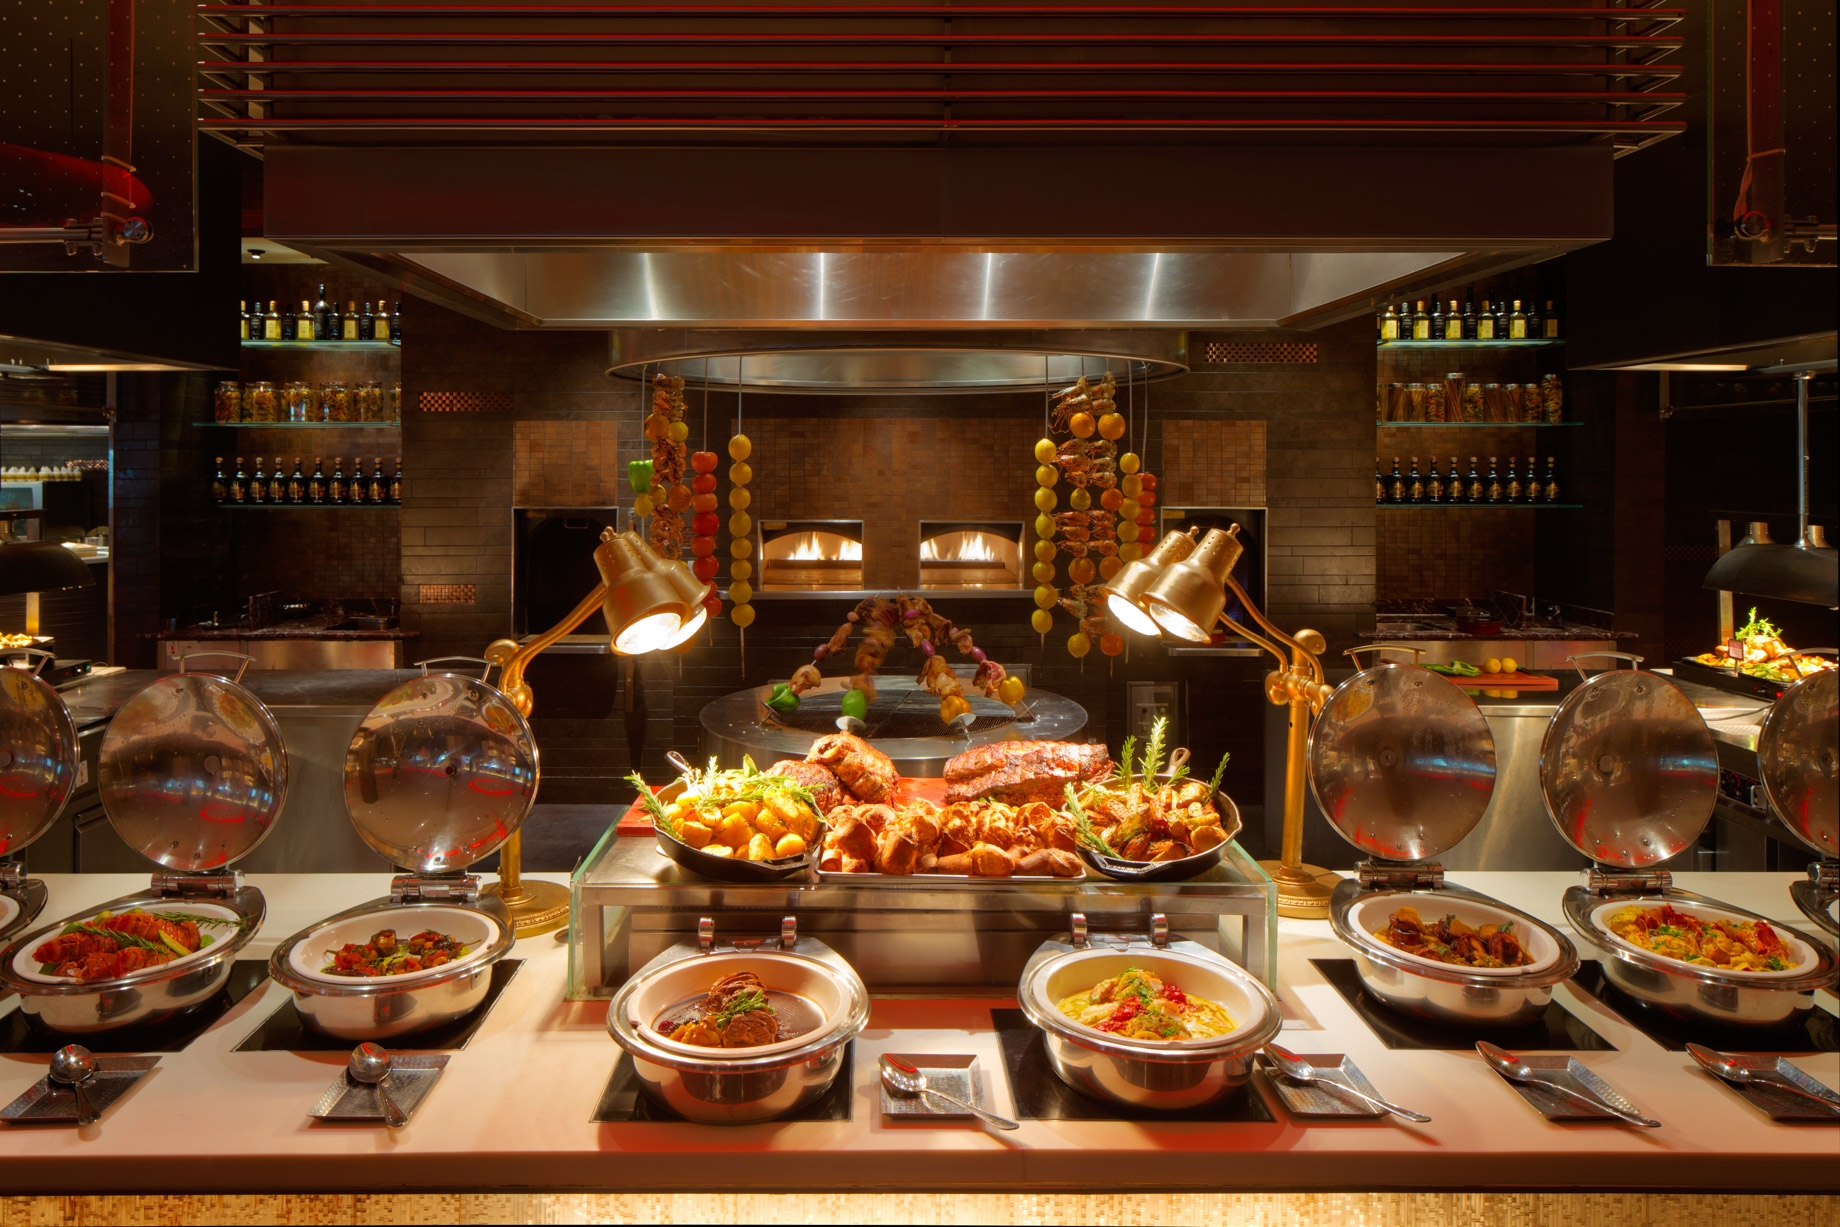 Atlantis The Palm Resort – Crescent Rd, Dubai, UAE – Saffron Restaurant Grill Station